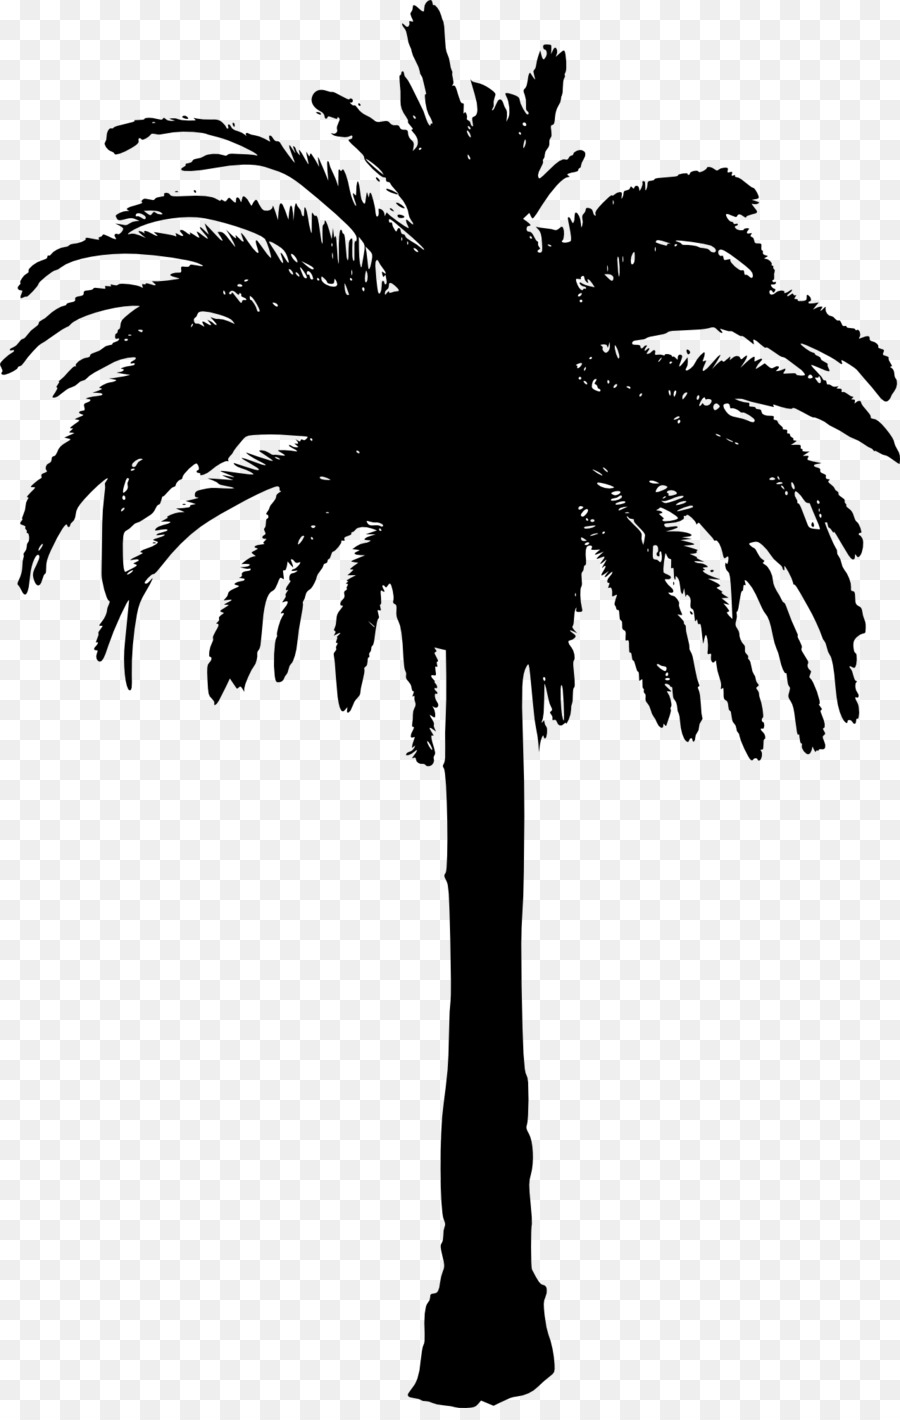 Arecaceae Silhouette Tree Clip art - coconut tree png download - 1278*2000 - Free Transparent Arecaceae png Download.